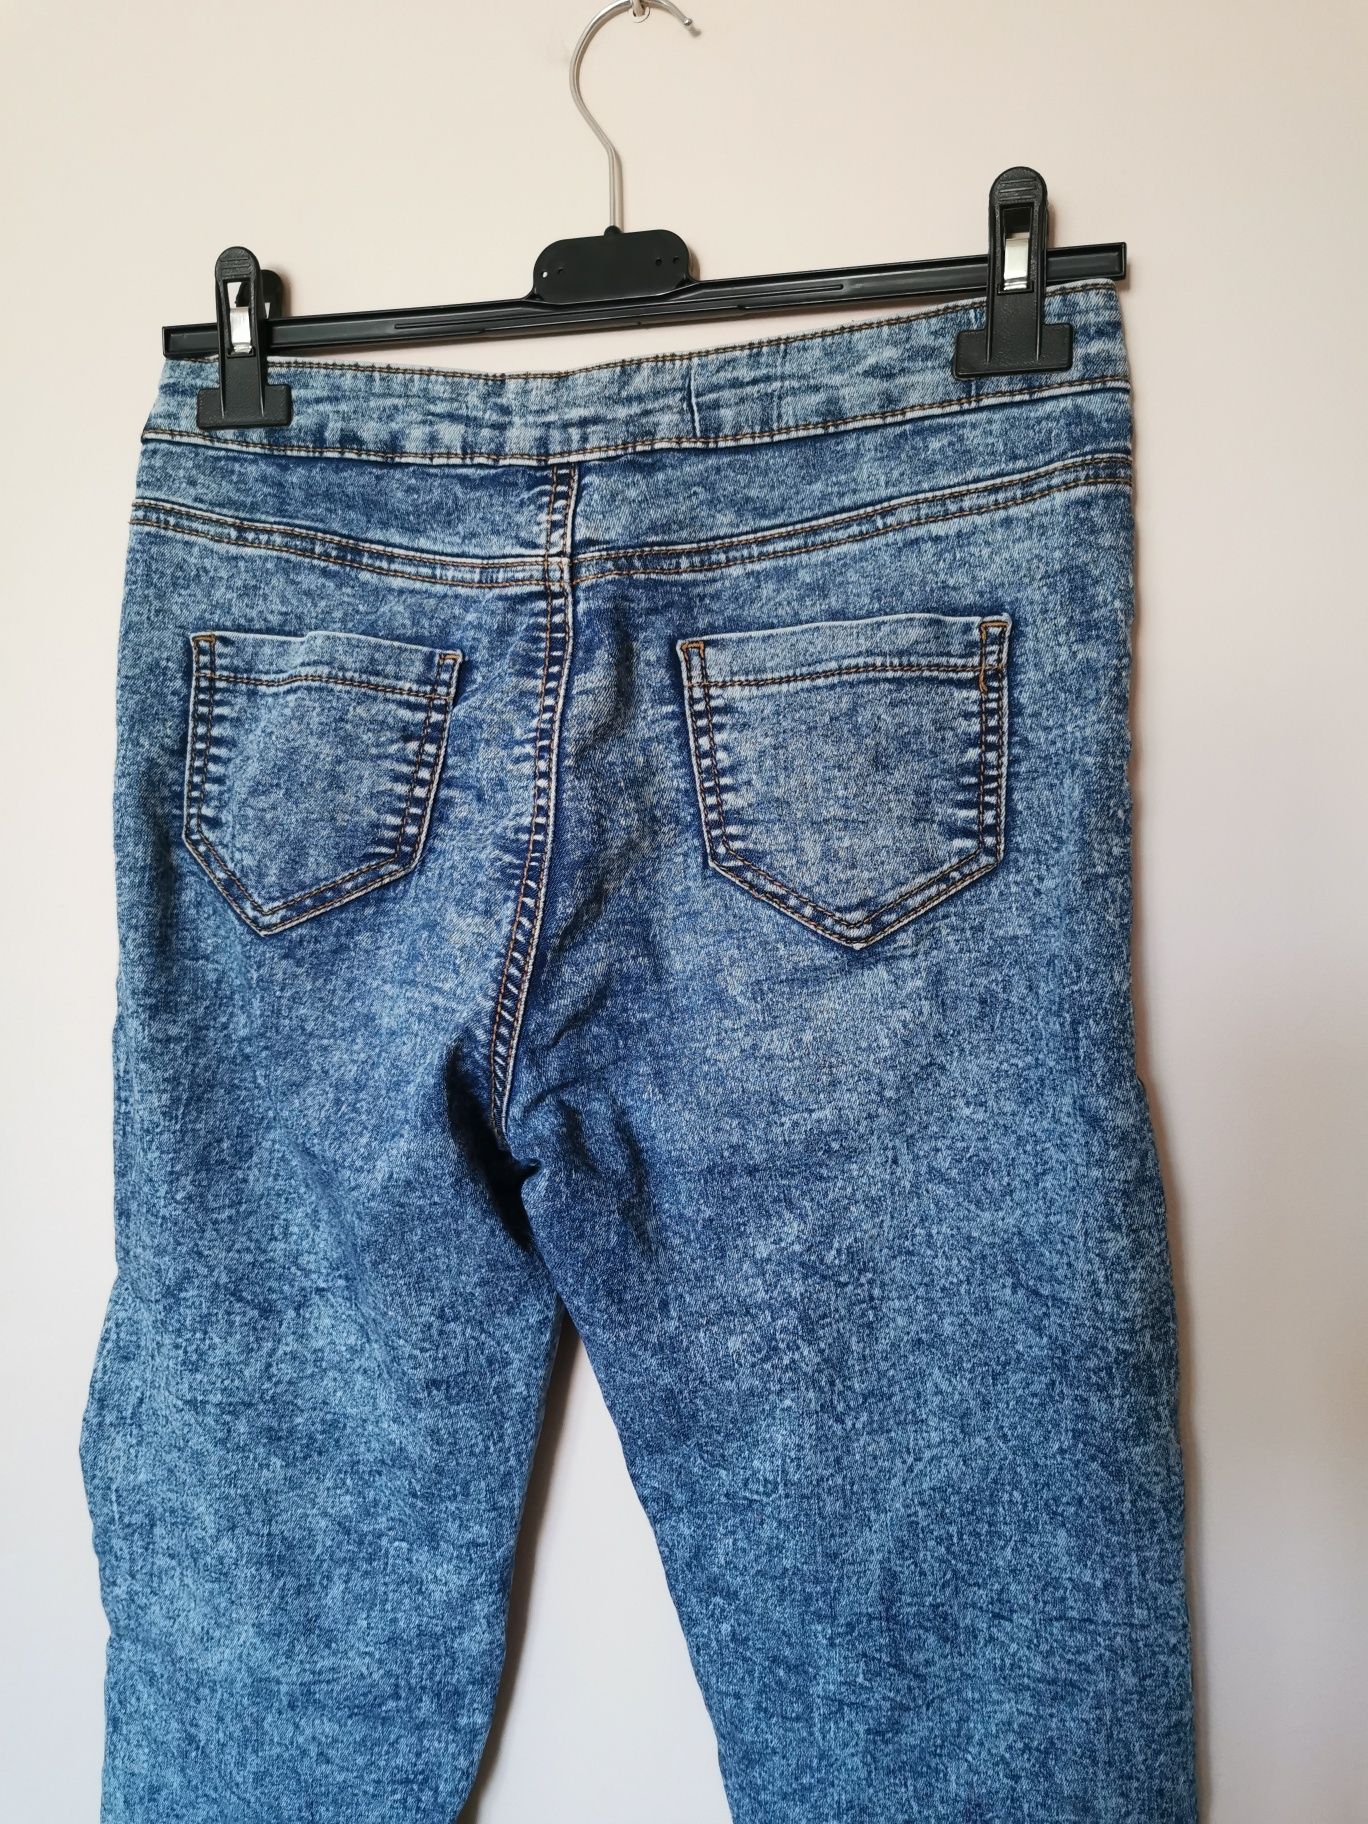 Jeansy dżinsy skinny wysoki stan 36 38 S M vintage retro boho